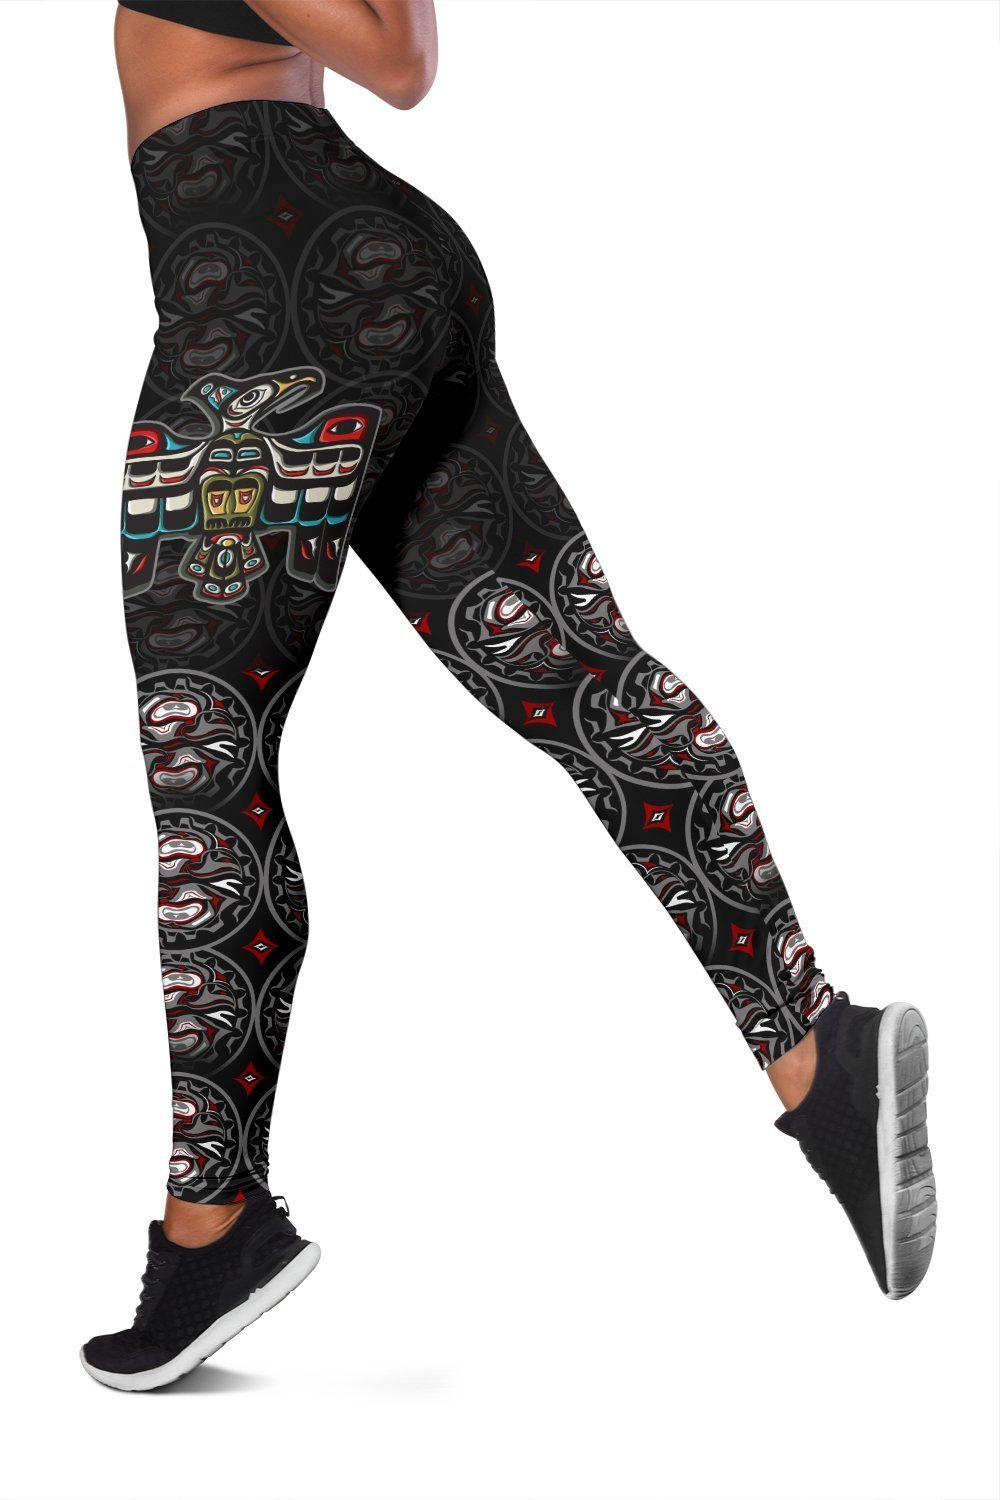 canada-haida-thunderbird-tattoo-style-womens-leggings